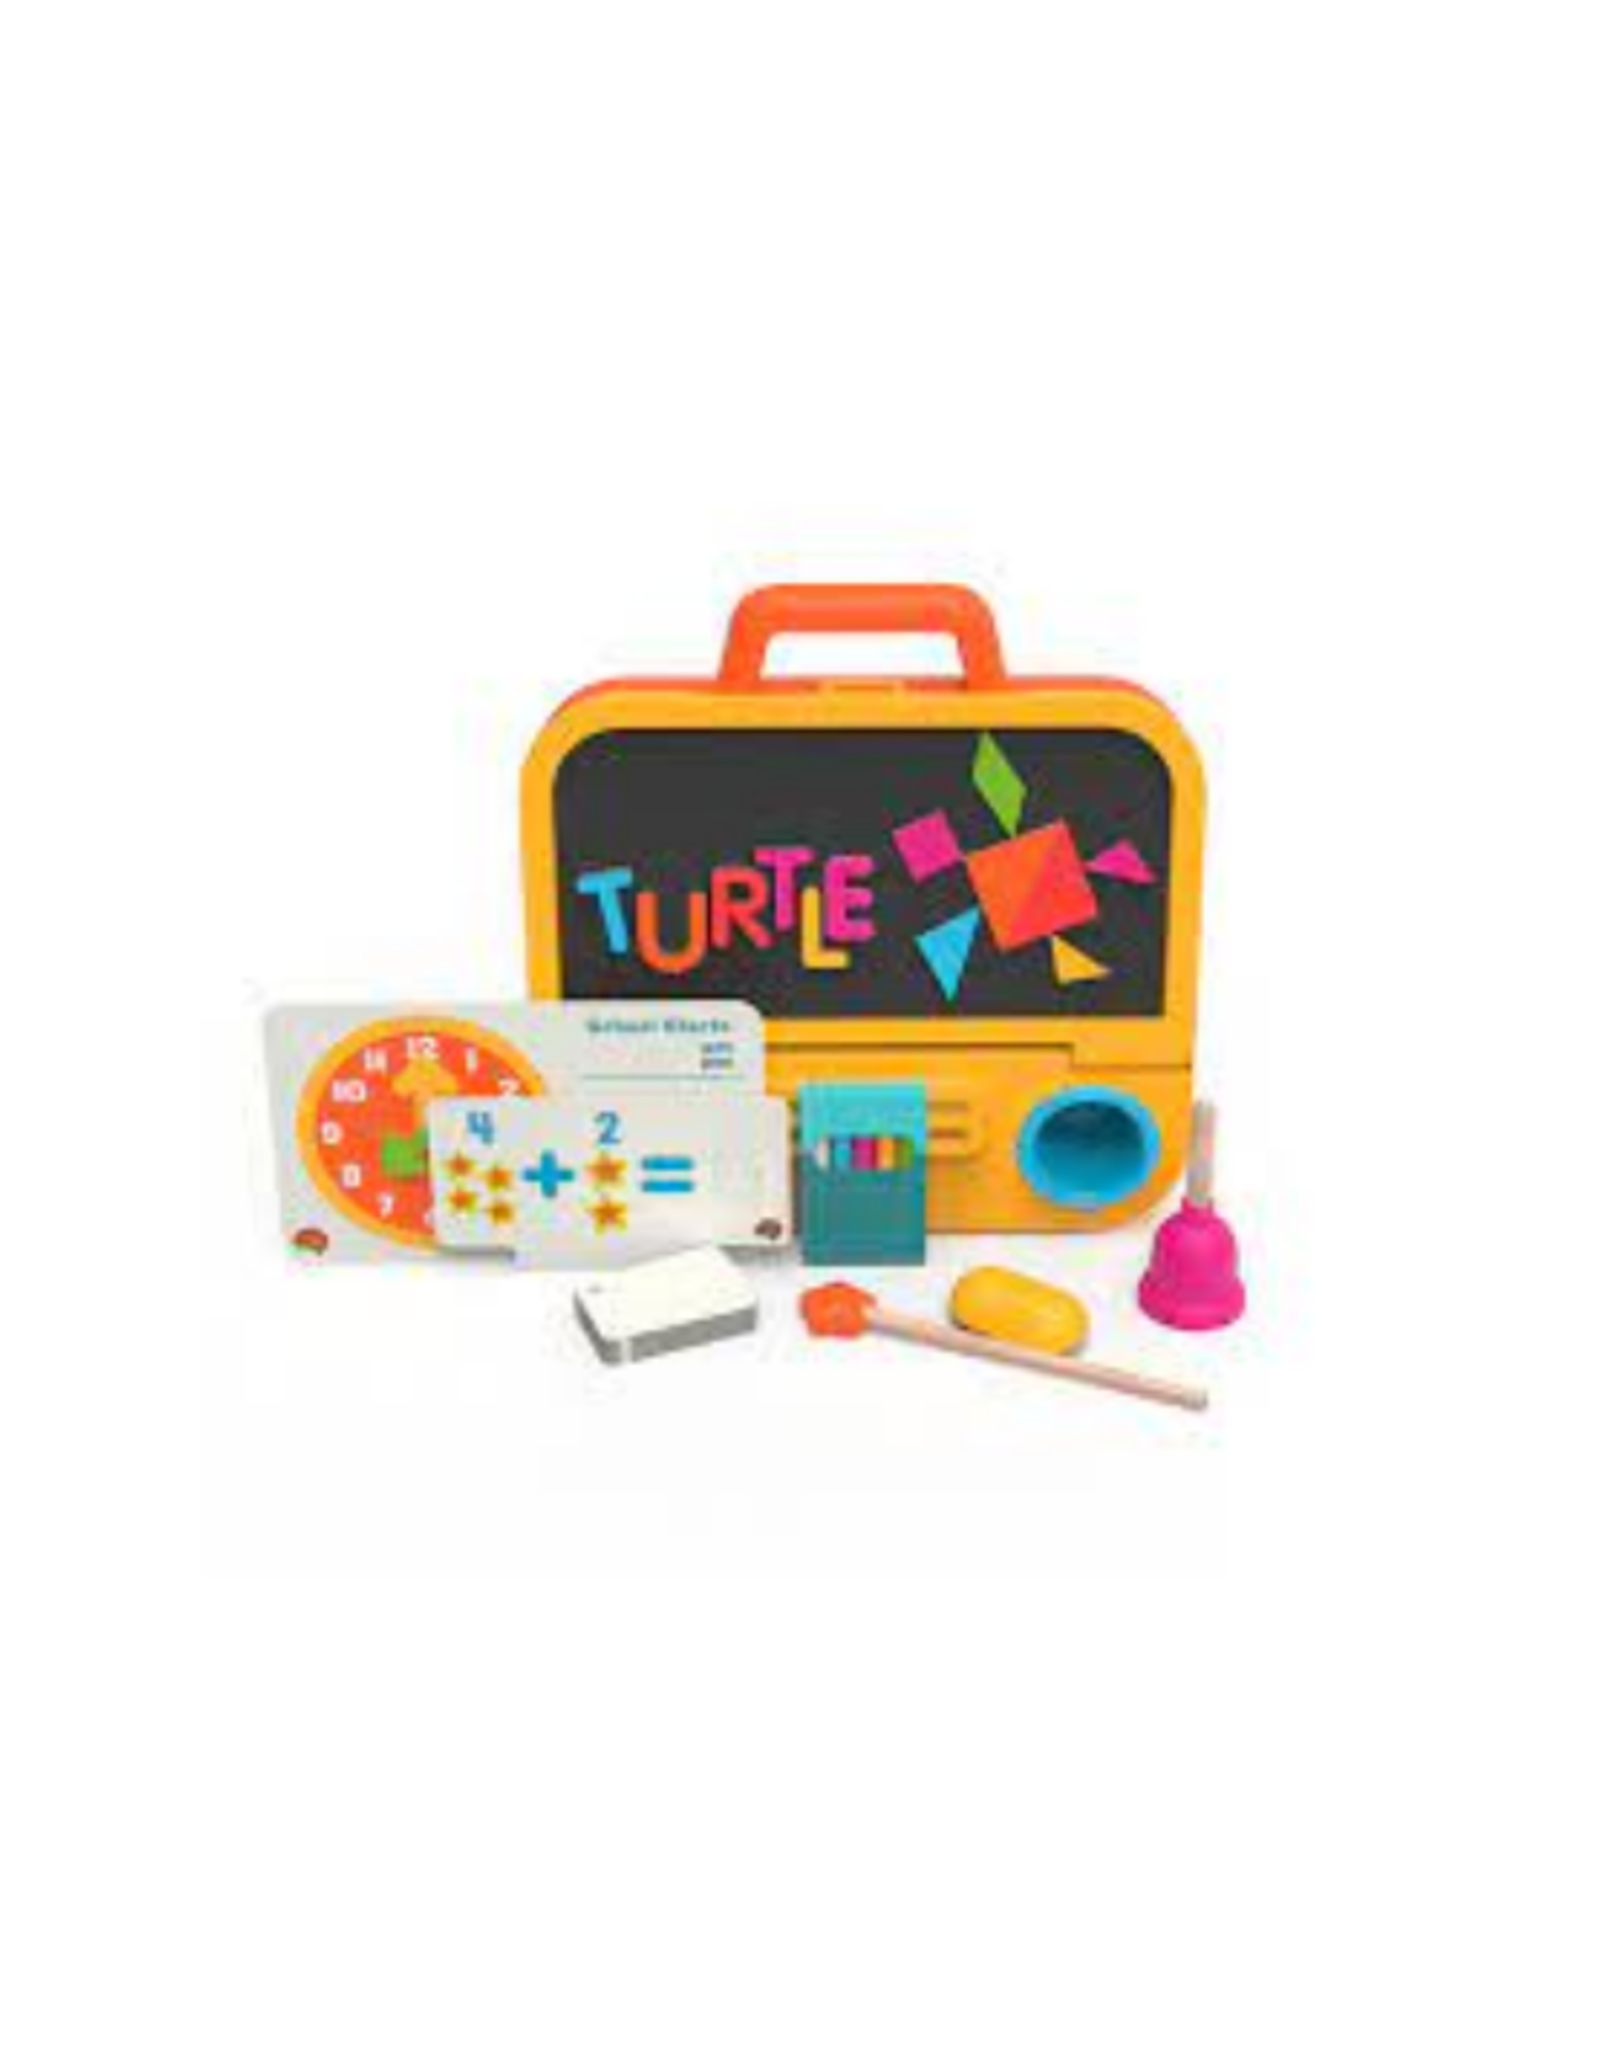 Fat Brain Toy Co. Fat Brain Toys - Pretendables School Set